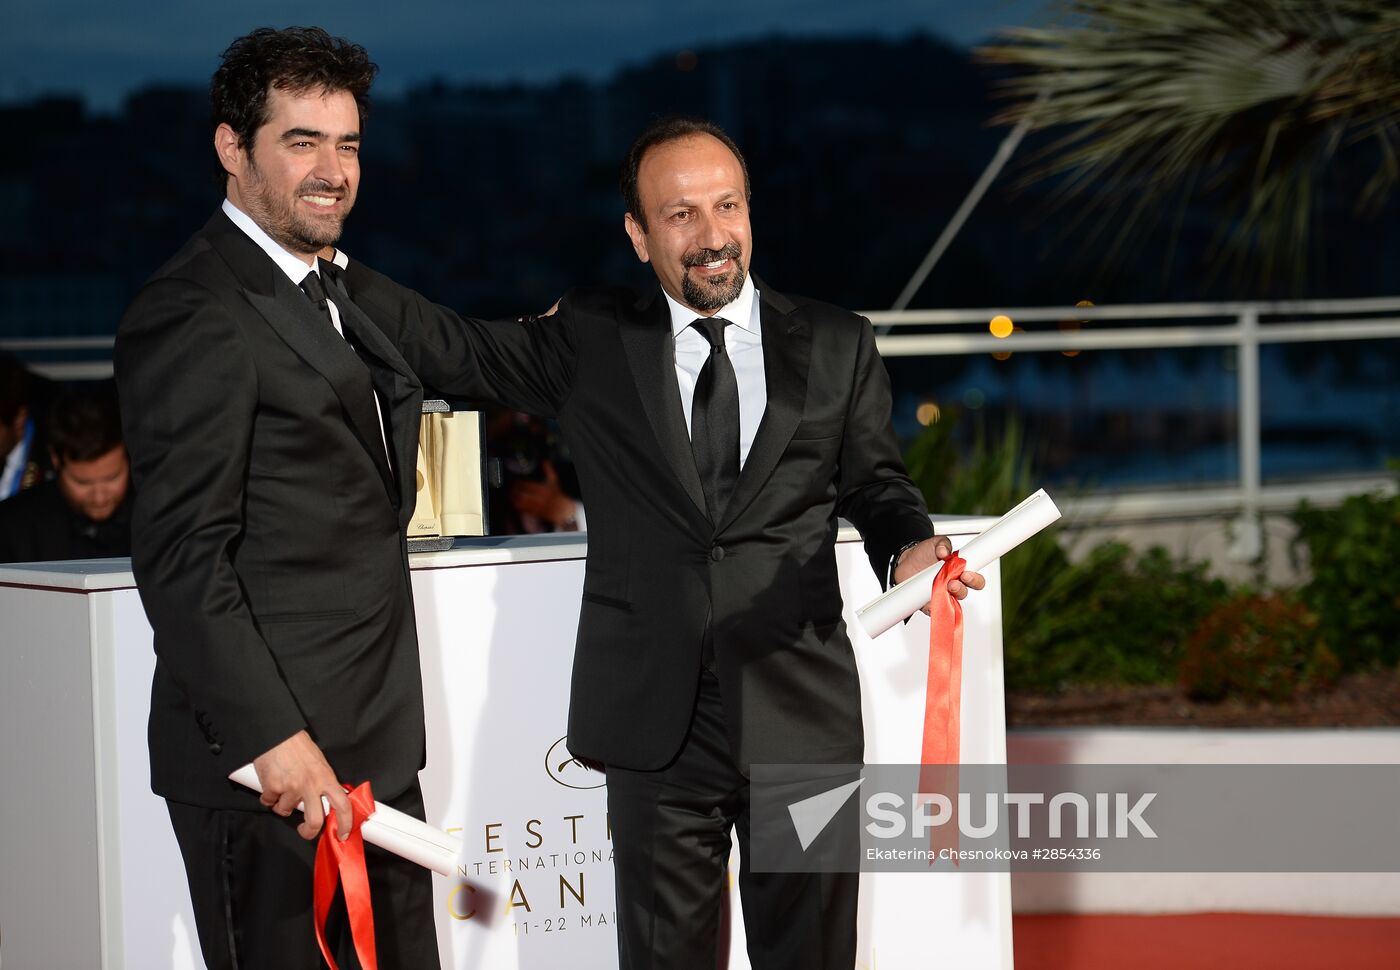 69th Cannes Film Festival closing ceremony